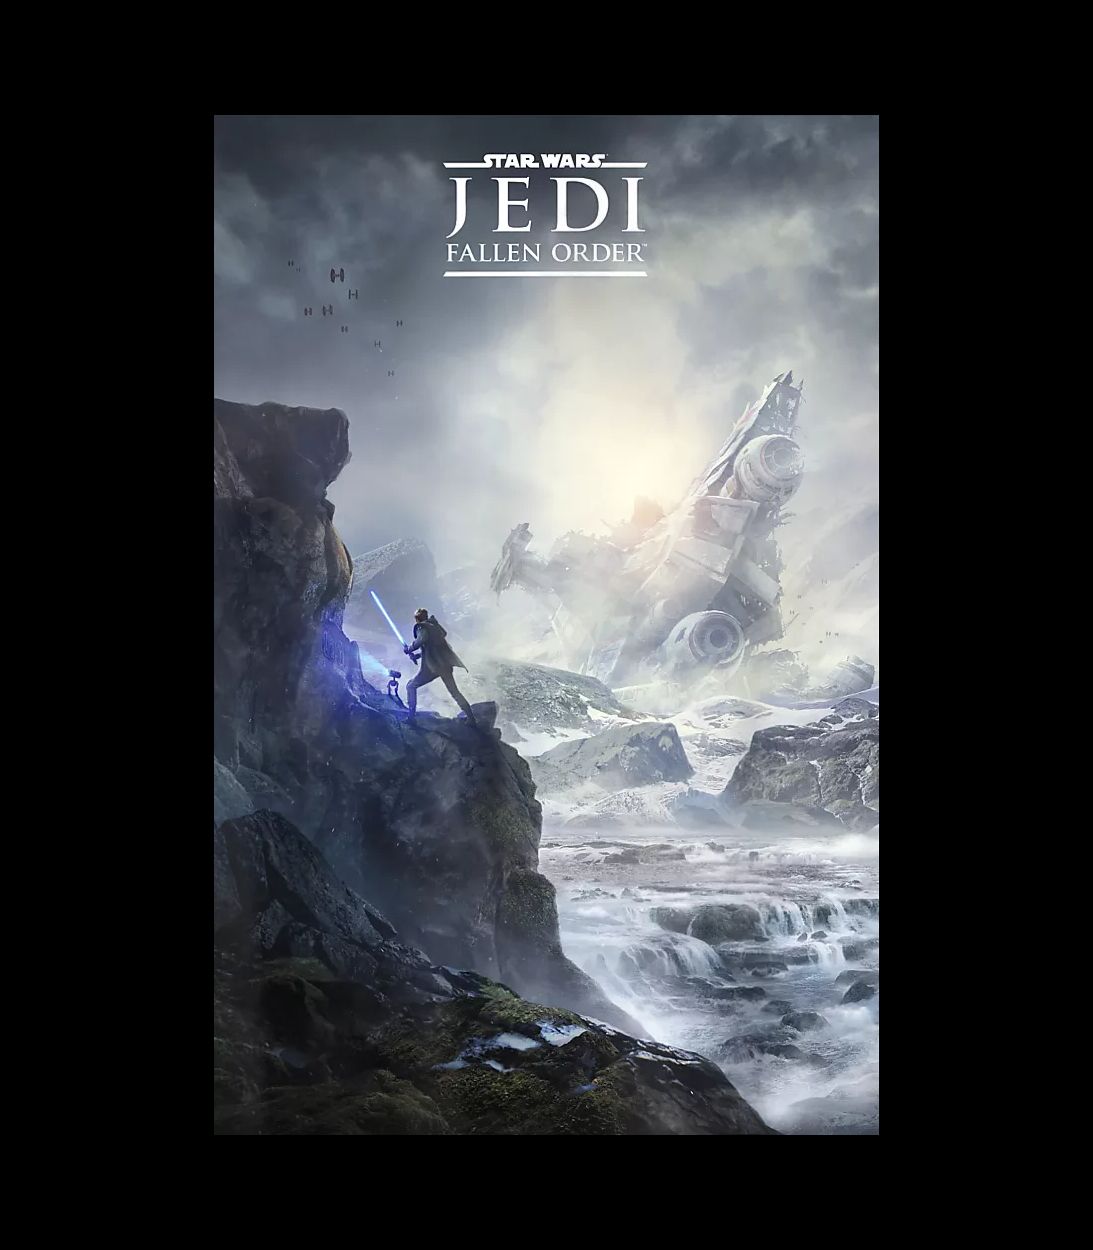 TLDR Star Wars Jedi The Fallen Order Poster